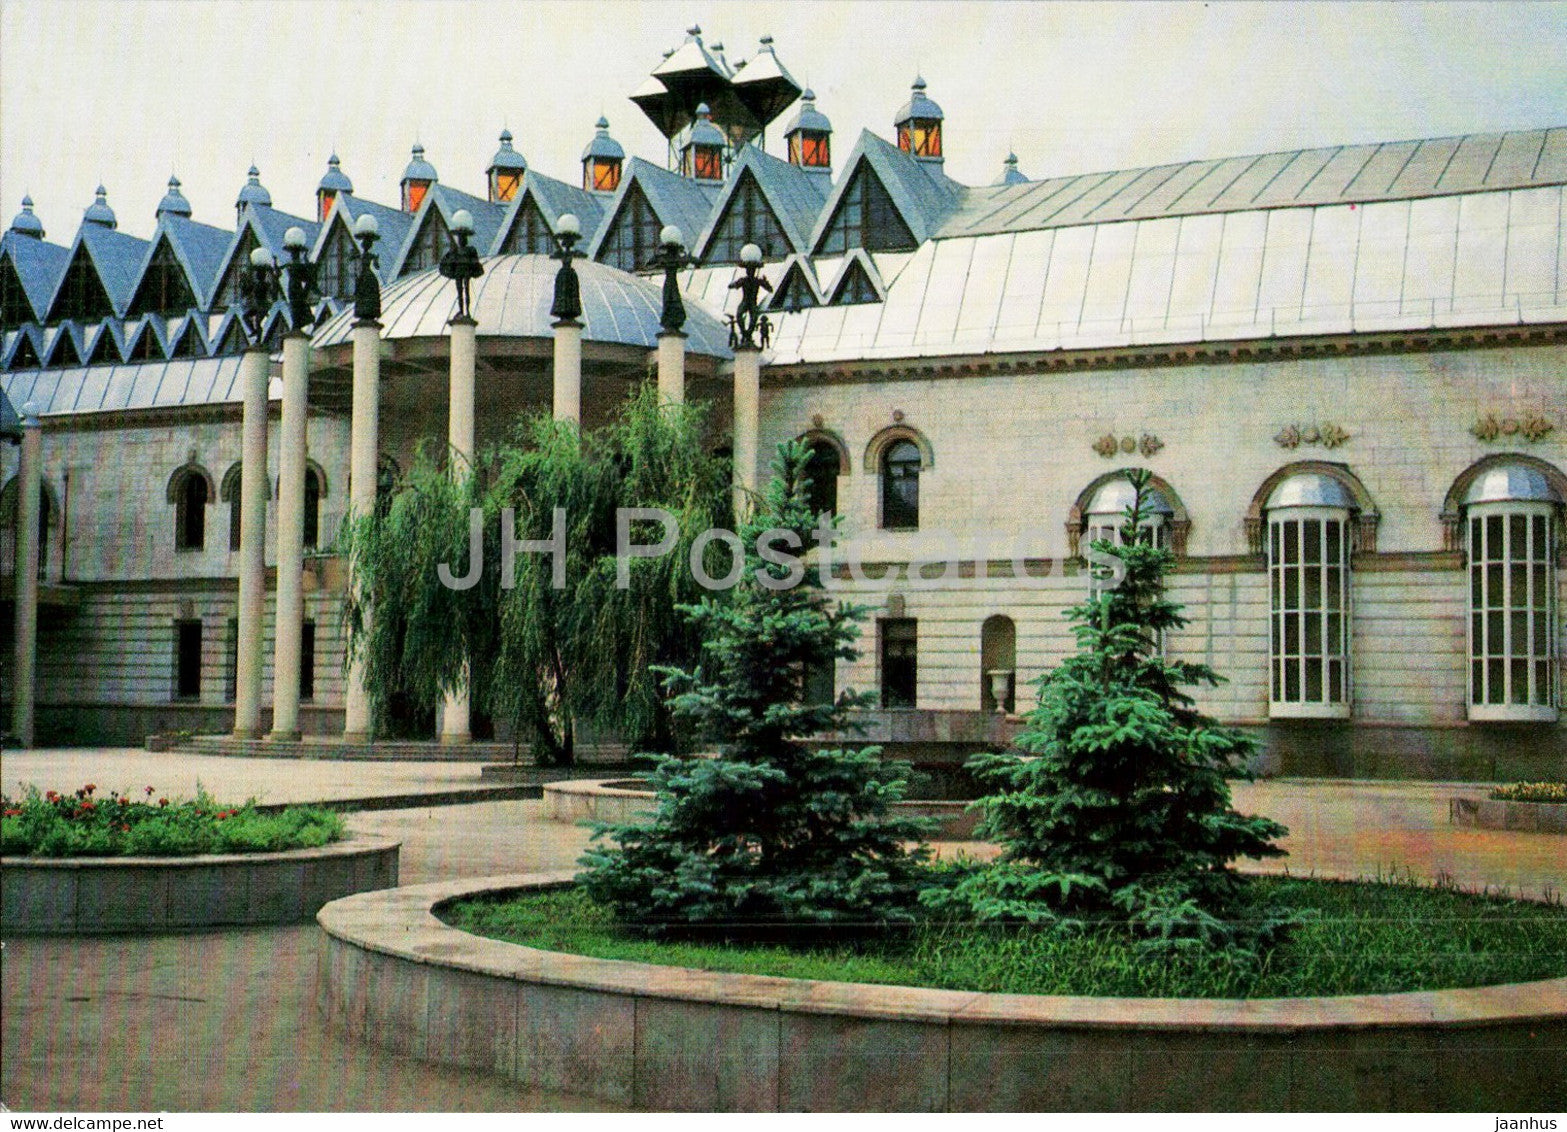 Voronezh - Puppet theatre - 1985 - Russia USSR - unused - JH Postcards